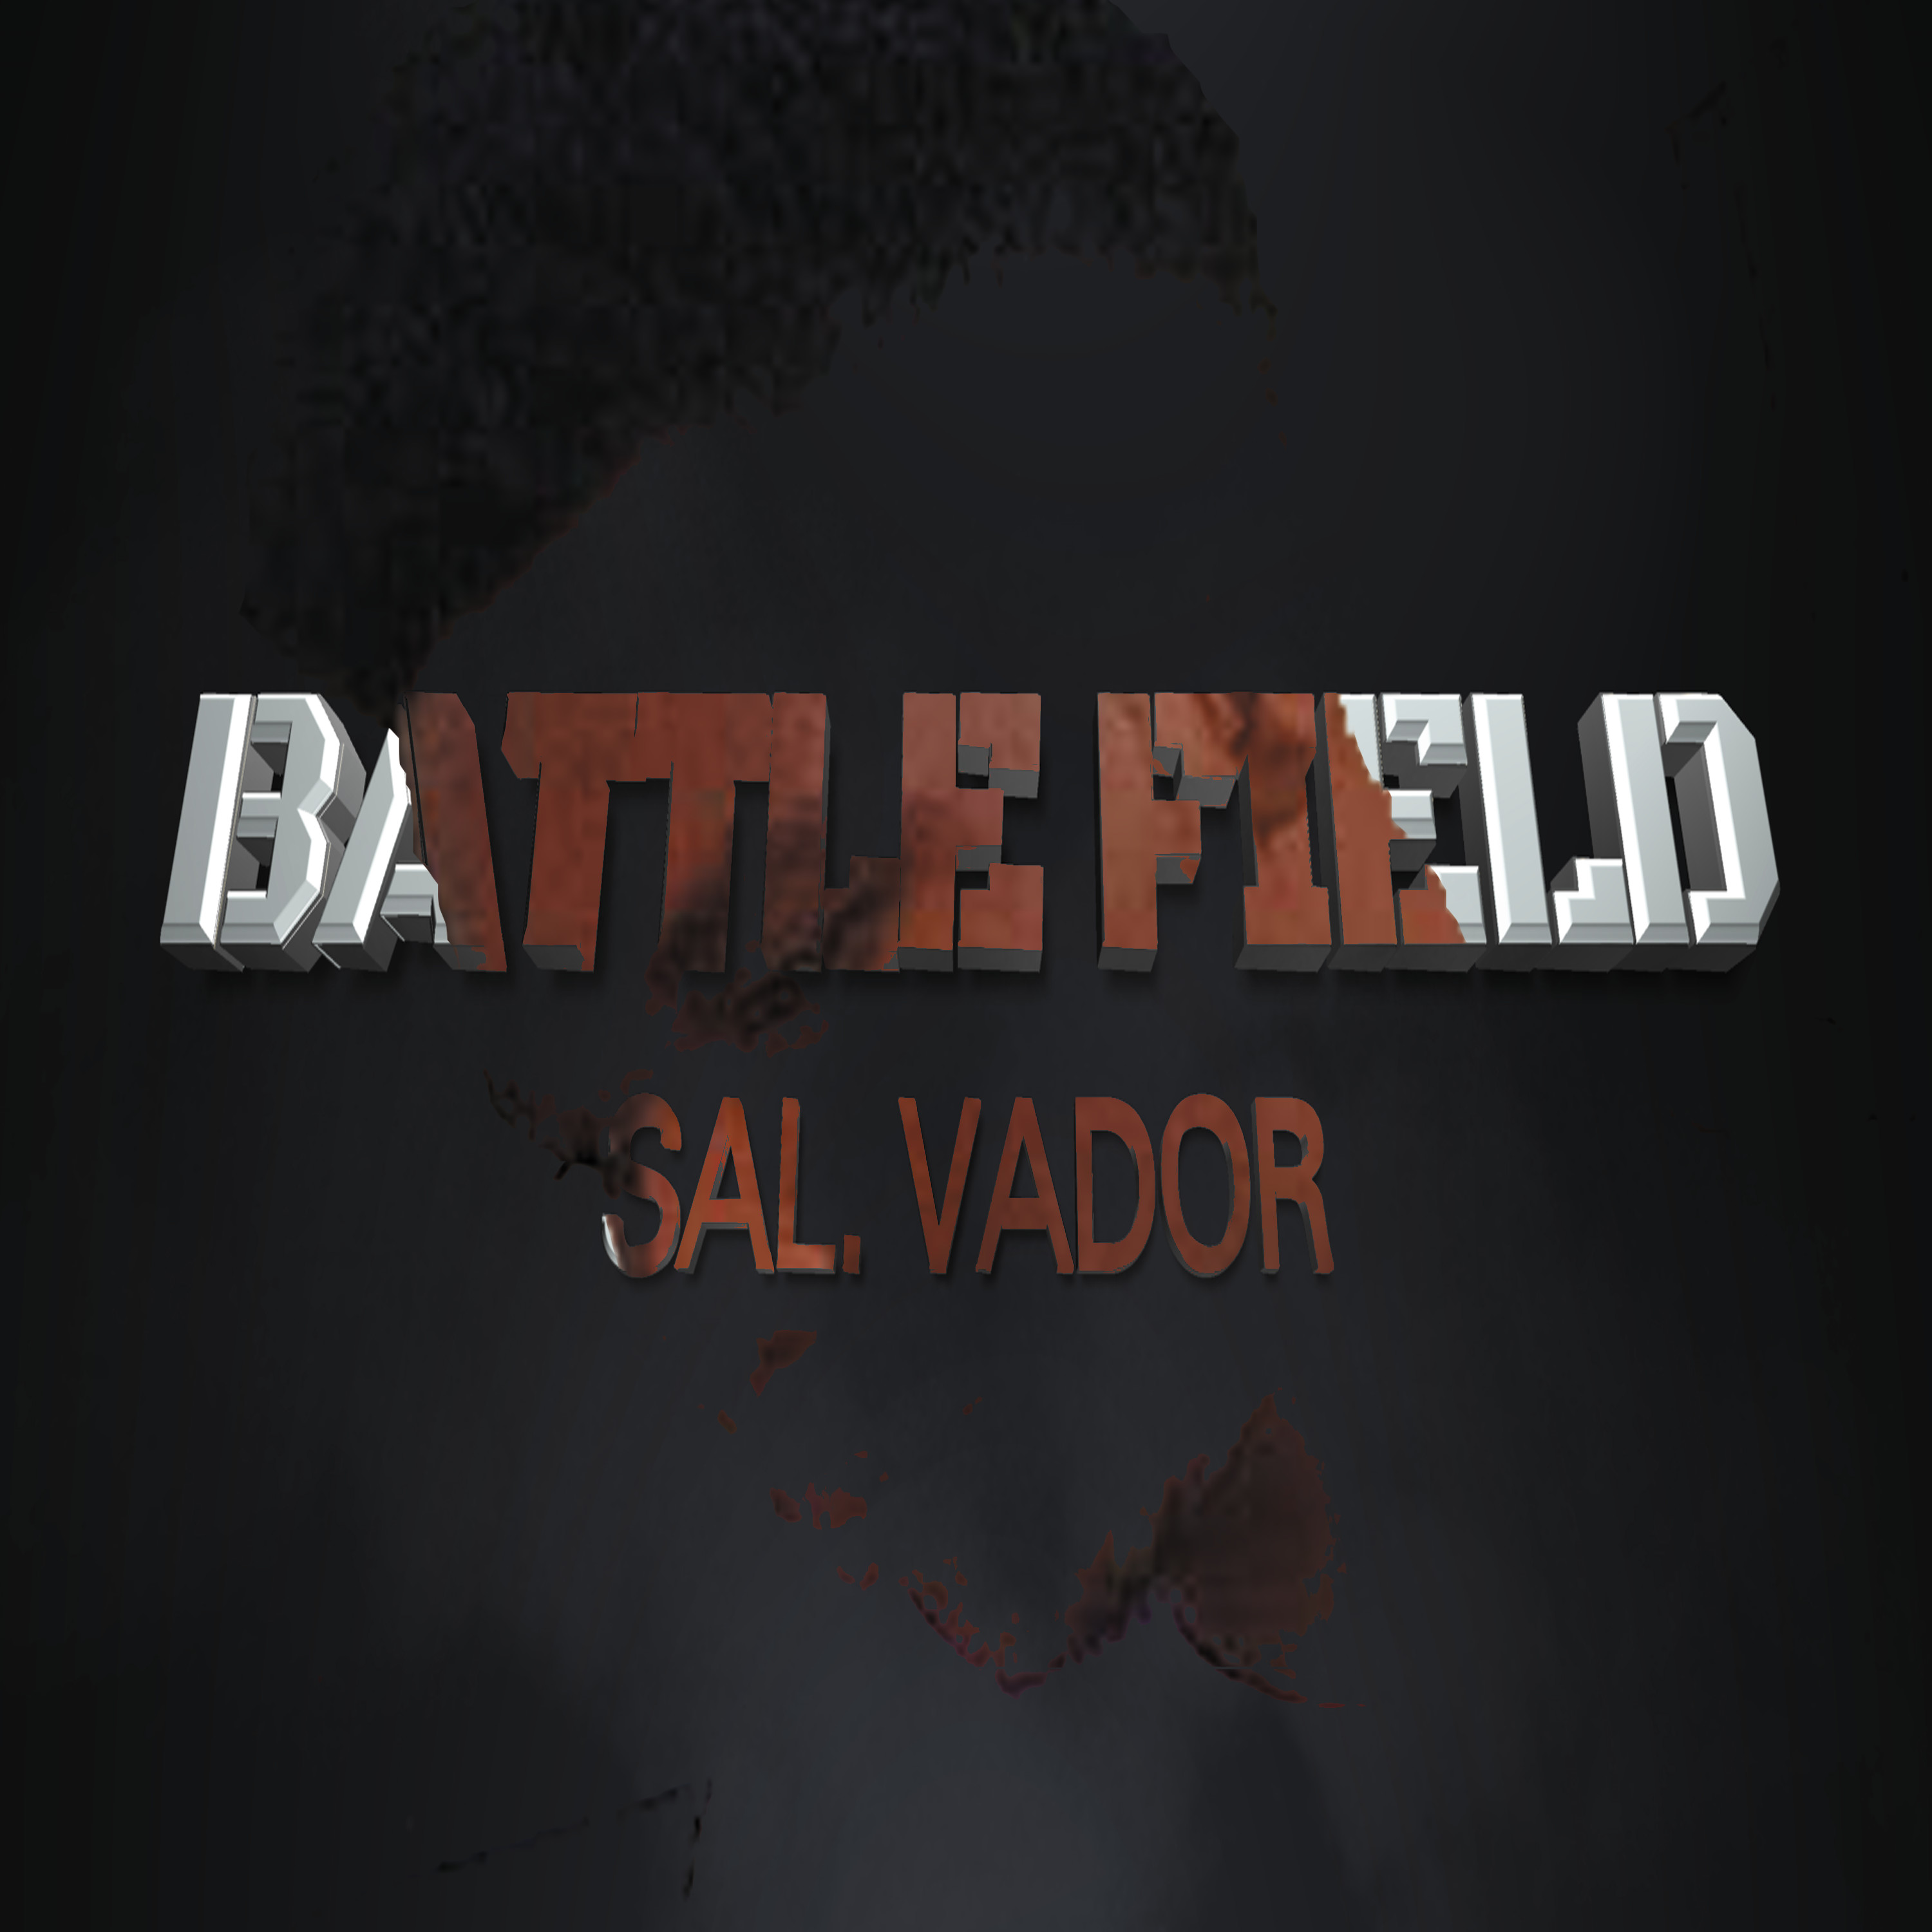 Art for Battle Field by sal. vador 